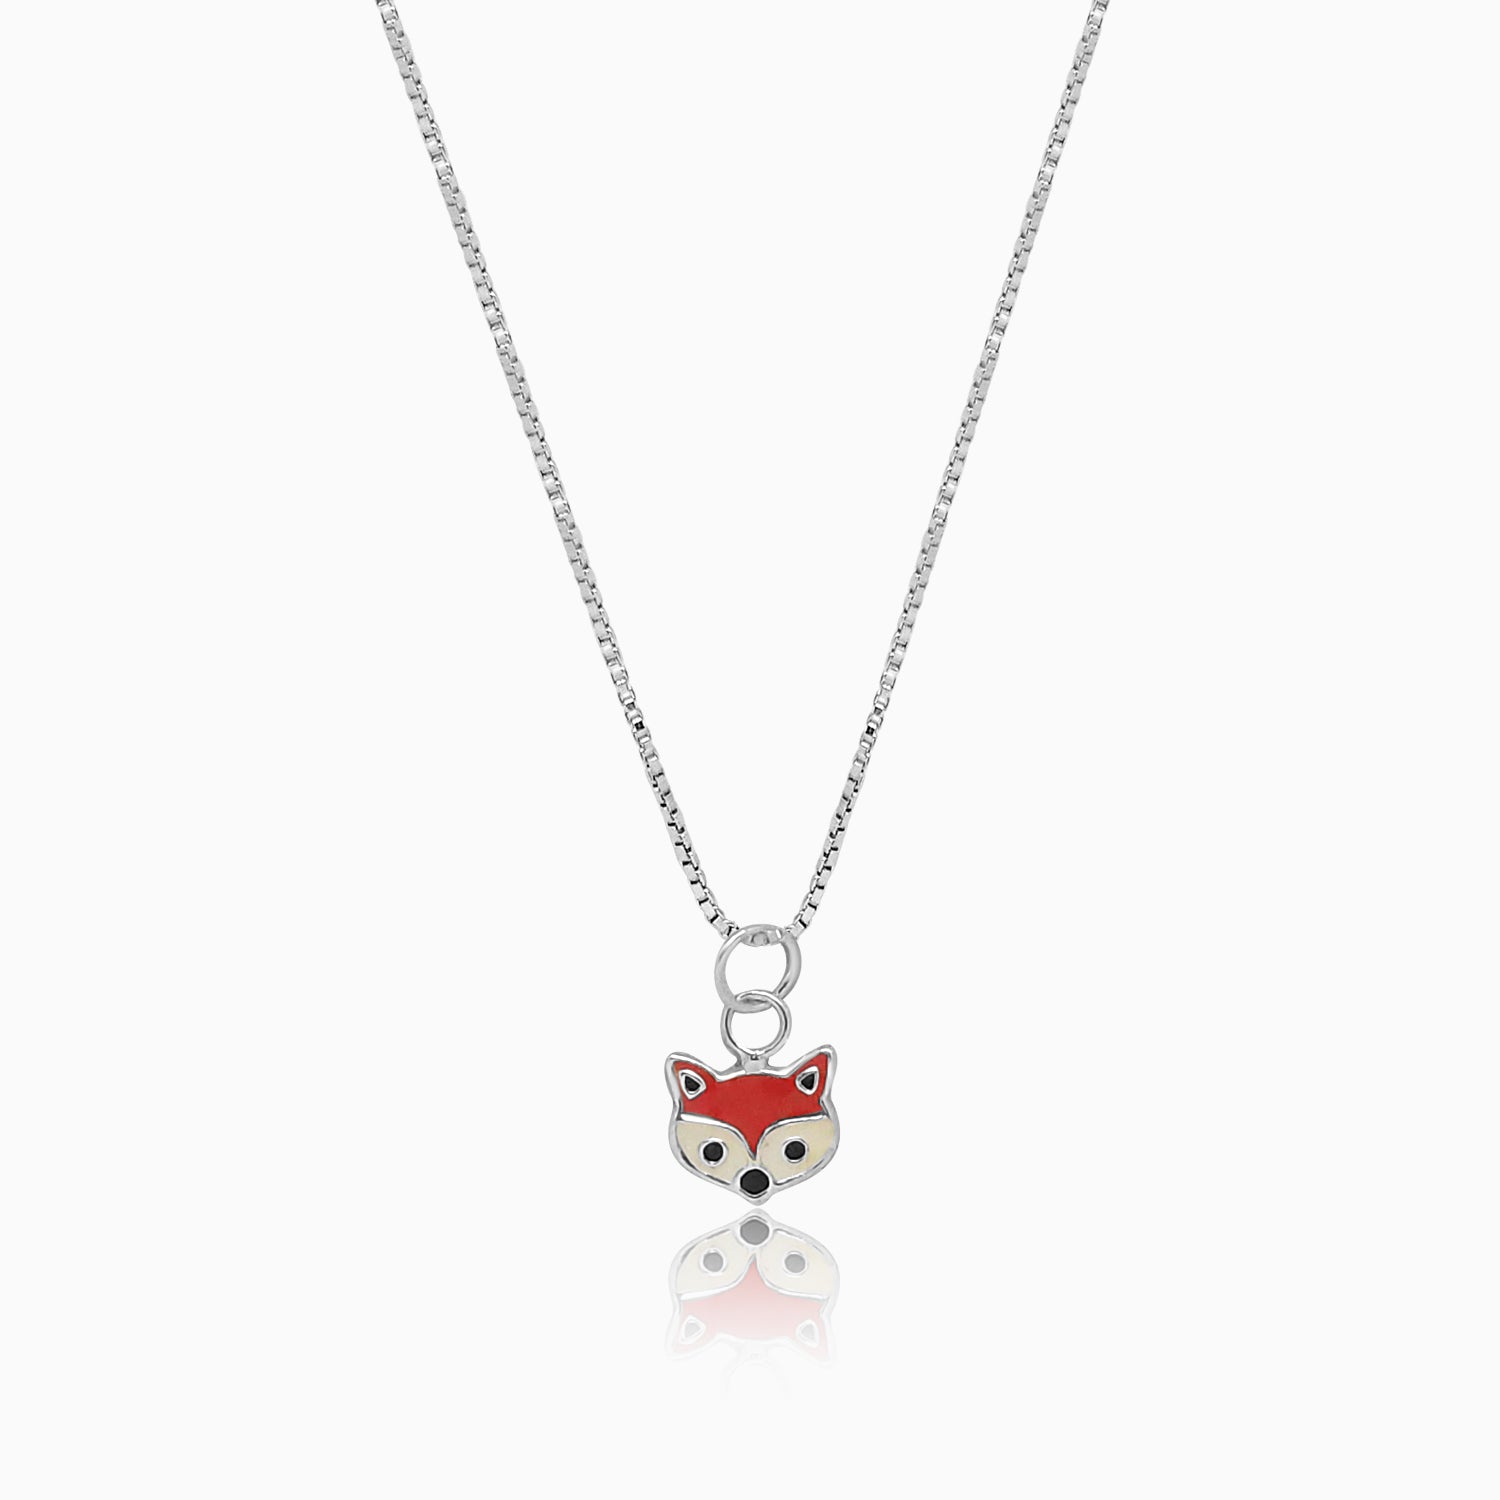 Silver Little Fox Necklace Set